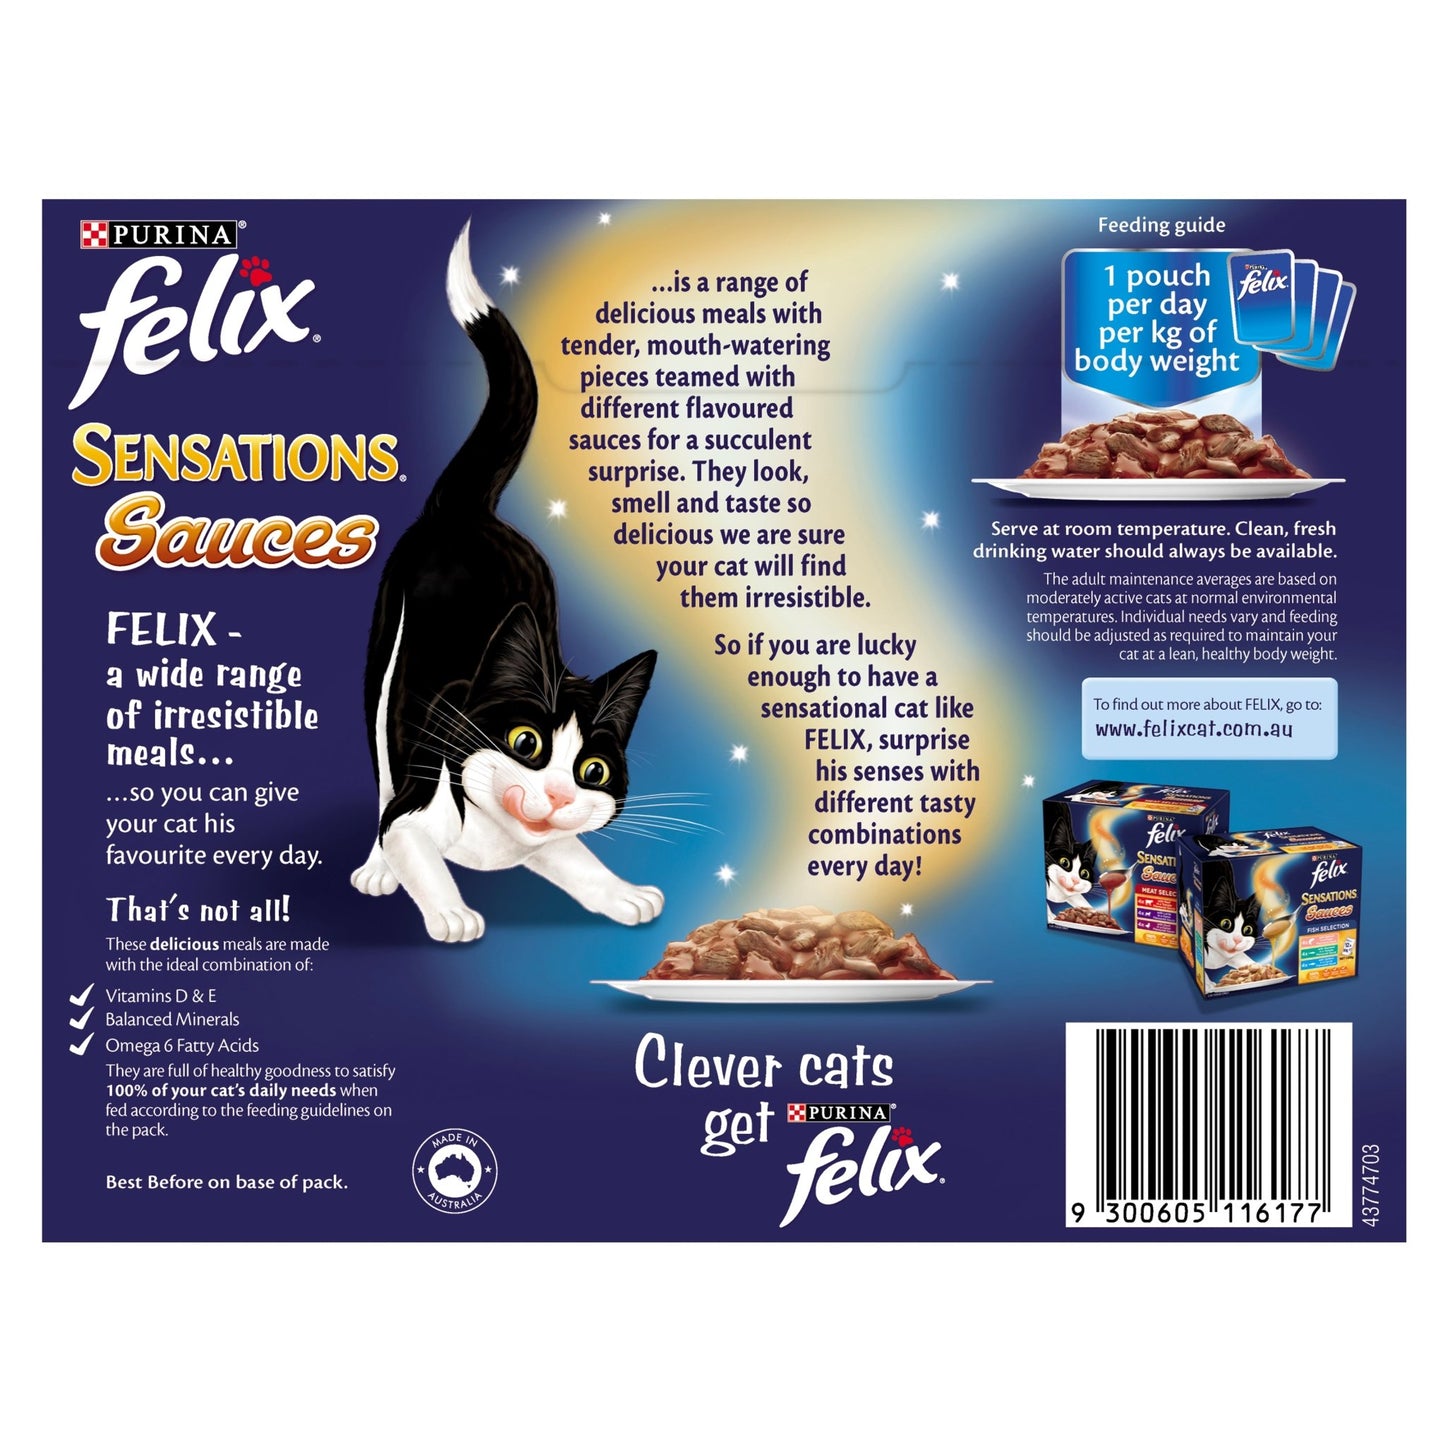 Felix Sensations Sauces Meat Selection 12x85g - Woonona Petfood & Produce